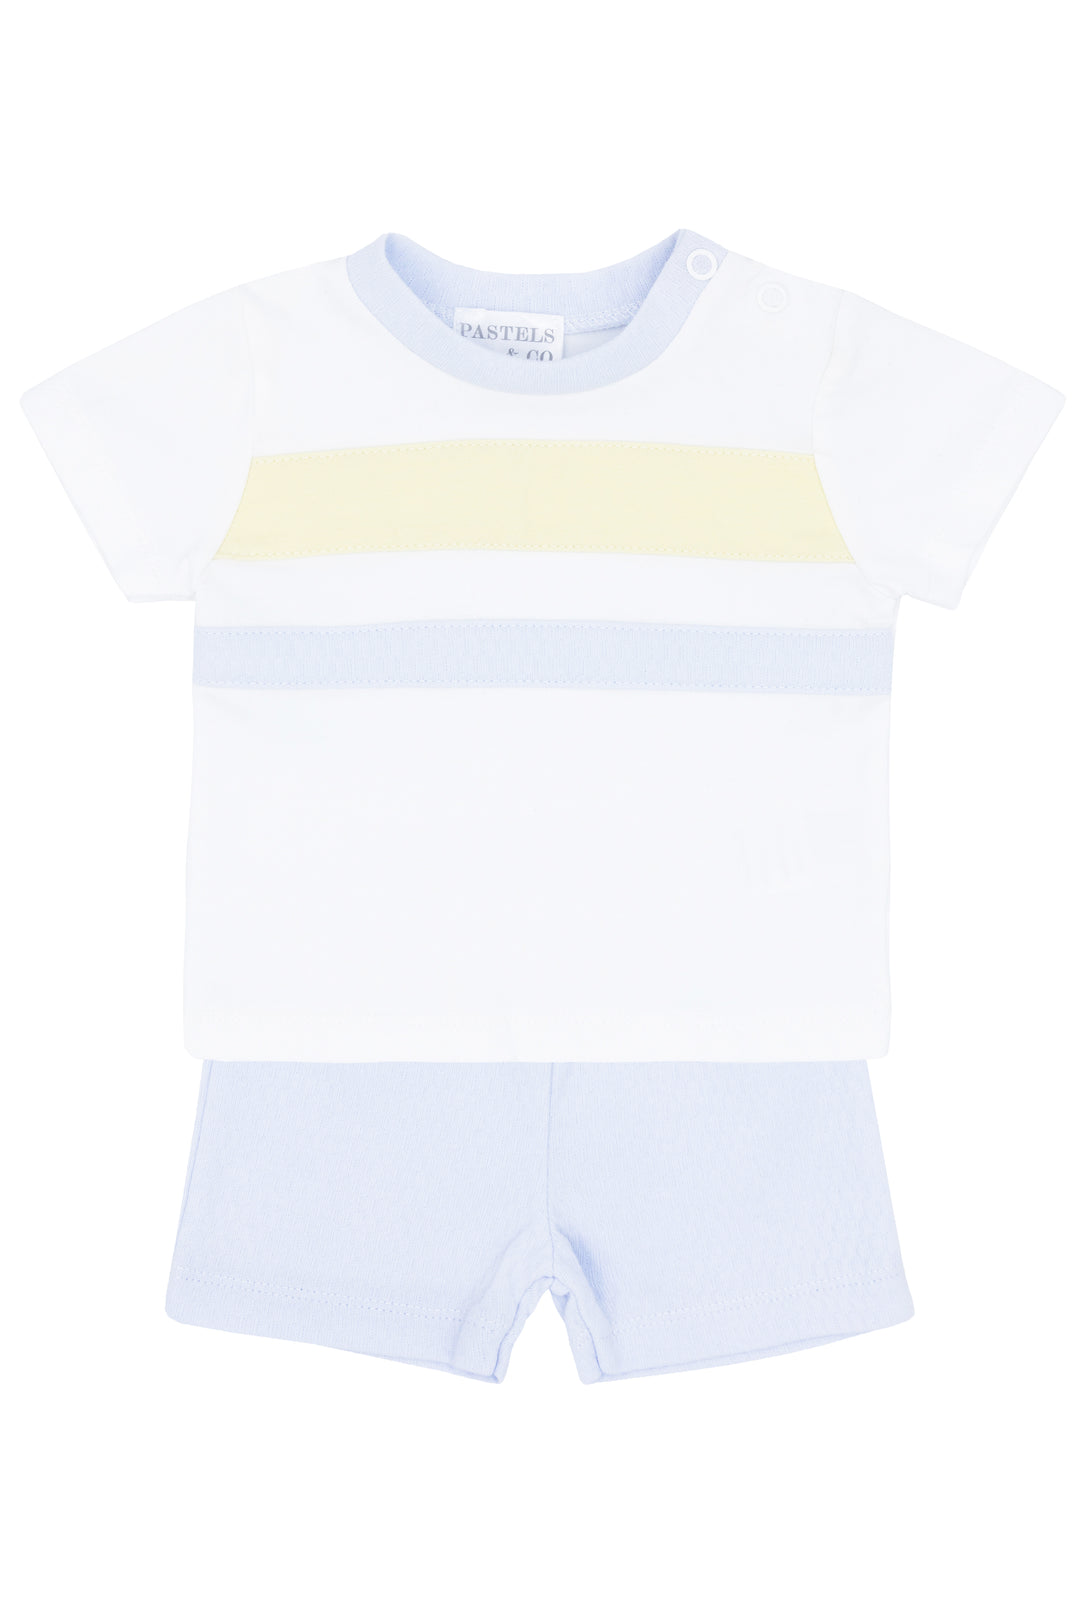 Pastels & Co "Buster" Baby Blue & Lemon T-Shirt & Shorts | Millie and John